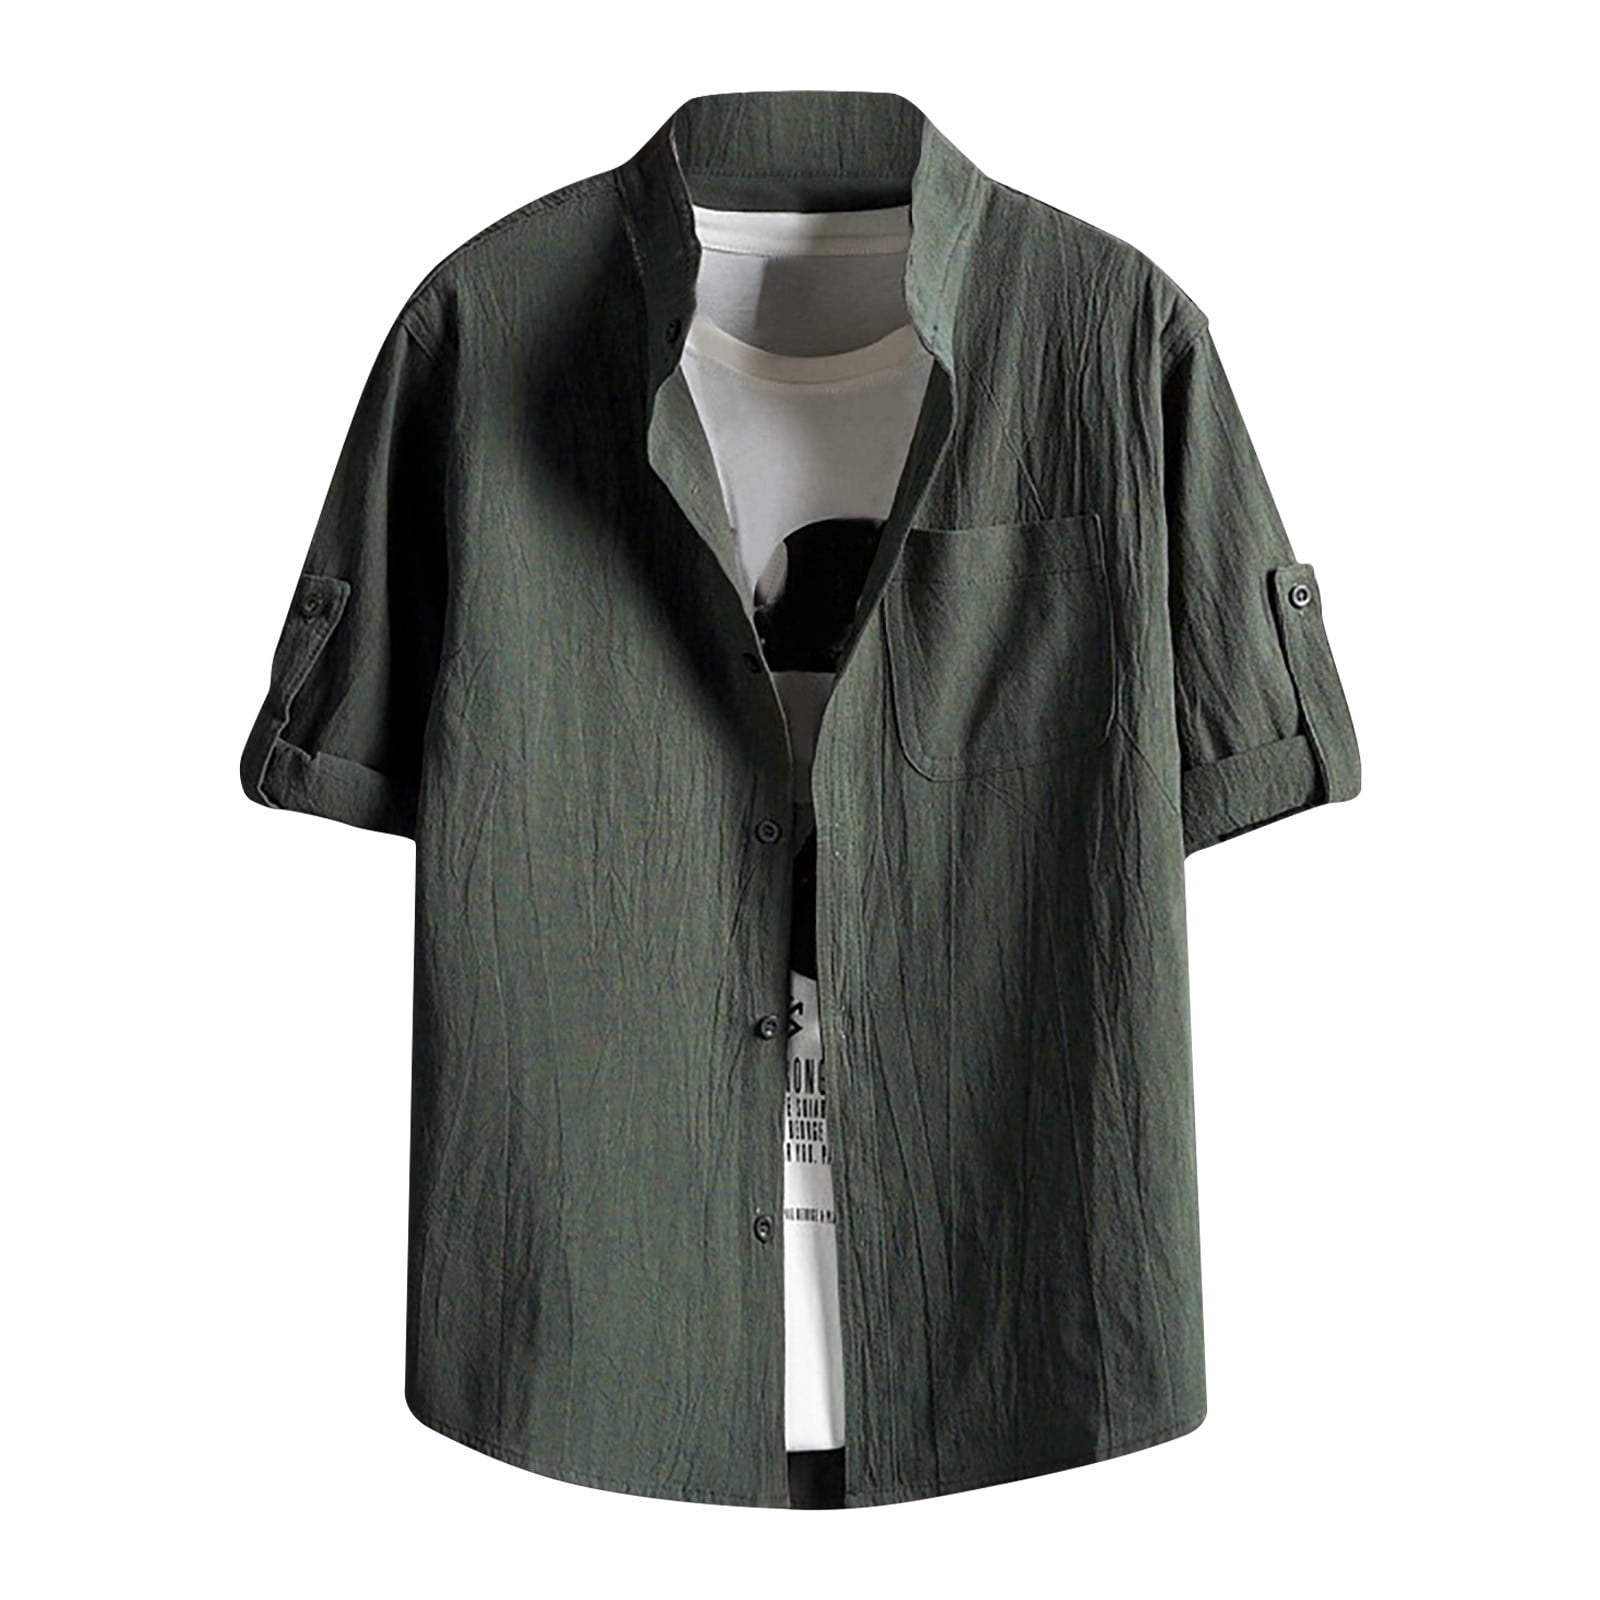 Jsezml Men's Cotton Linen Shirts Roll-Up Short Sleeve Casual Solid Button  Down Summer Beach Shirt Tops with Pocket 